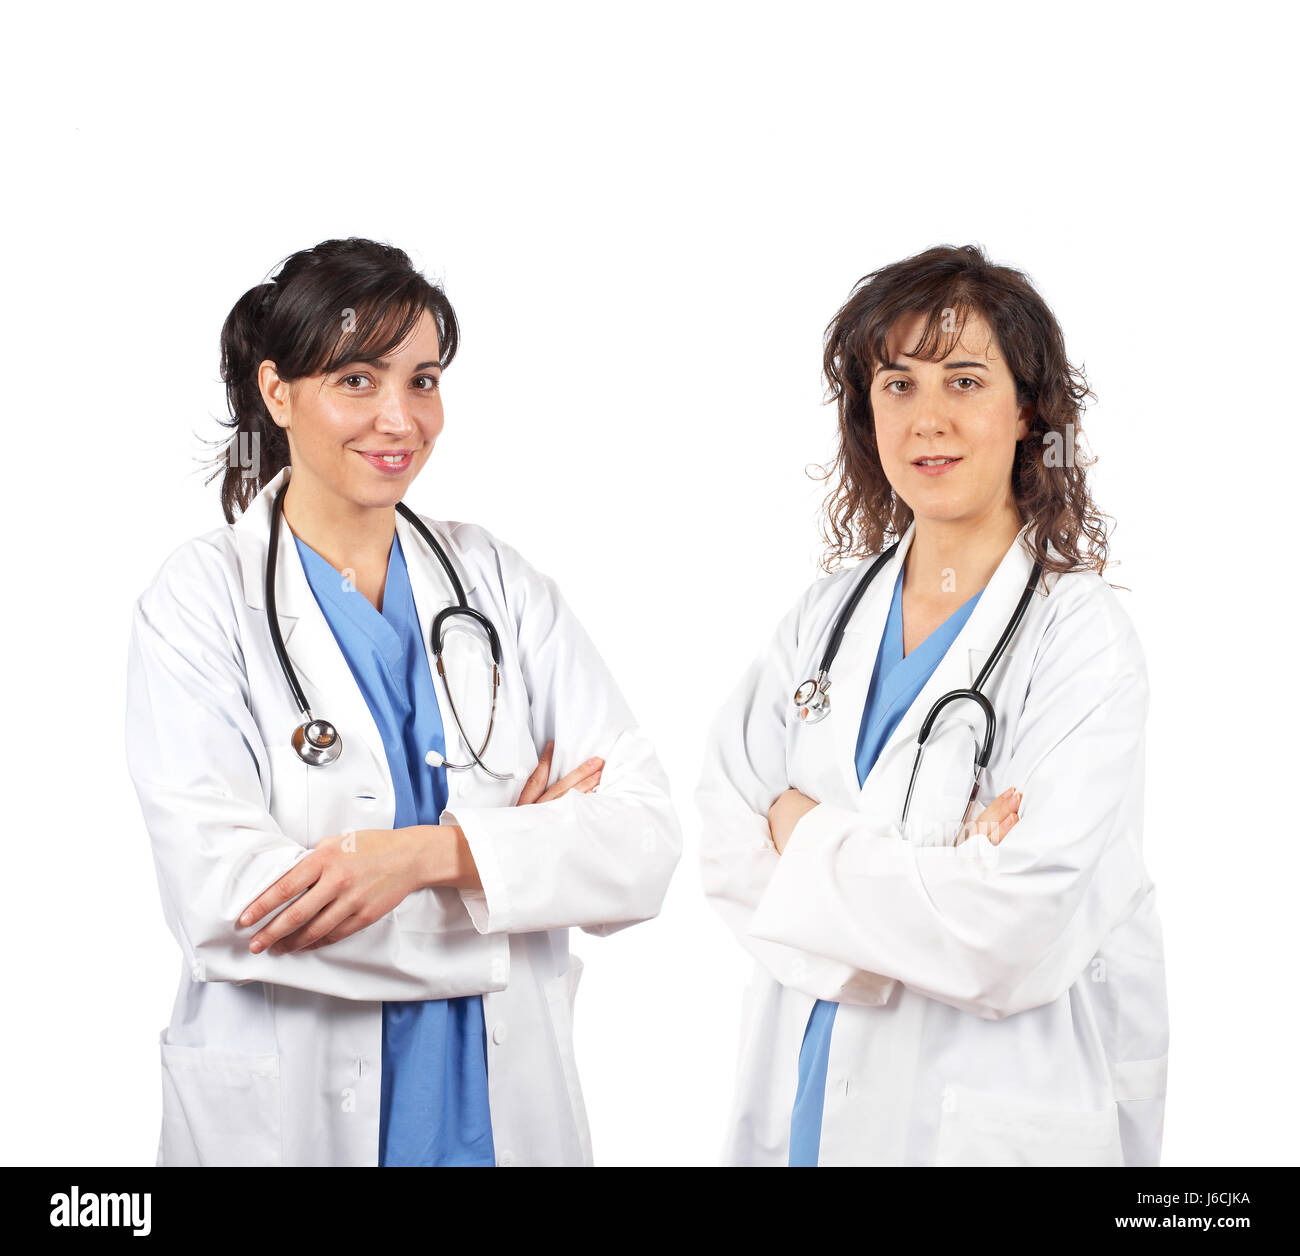 Две женщины врачи